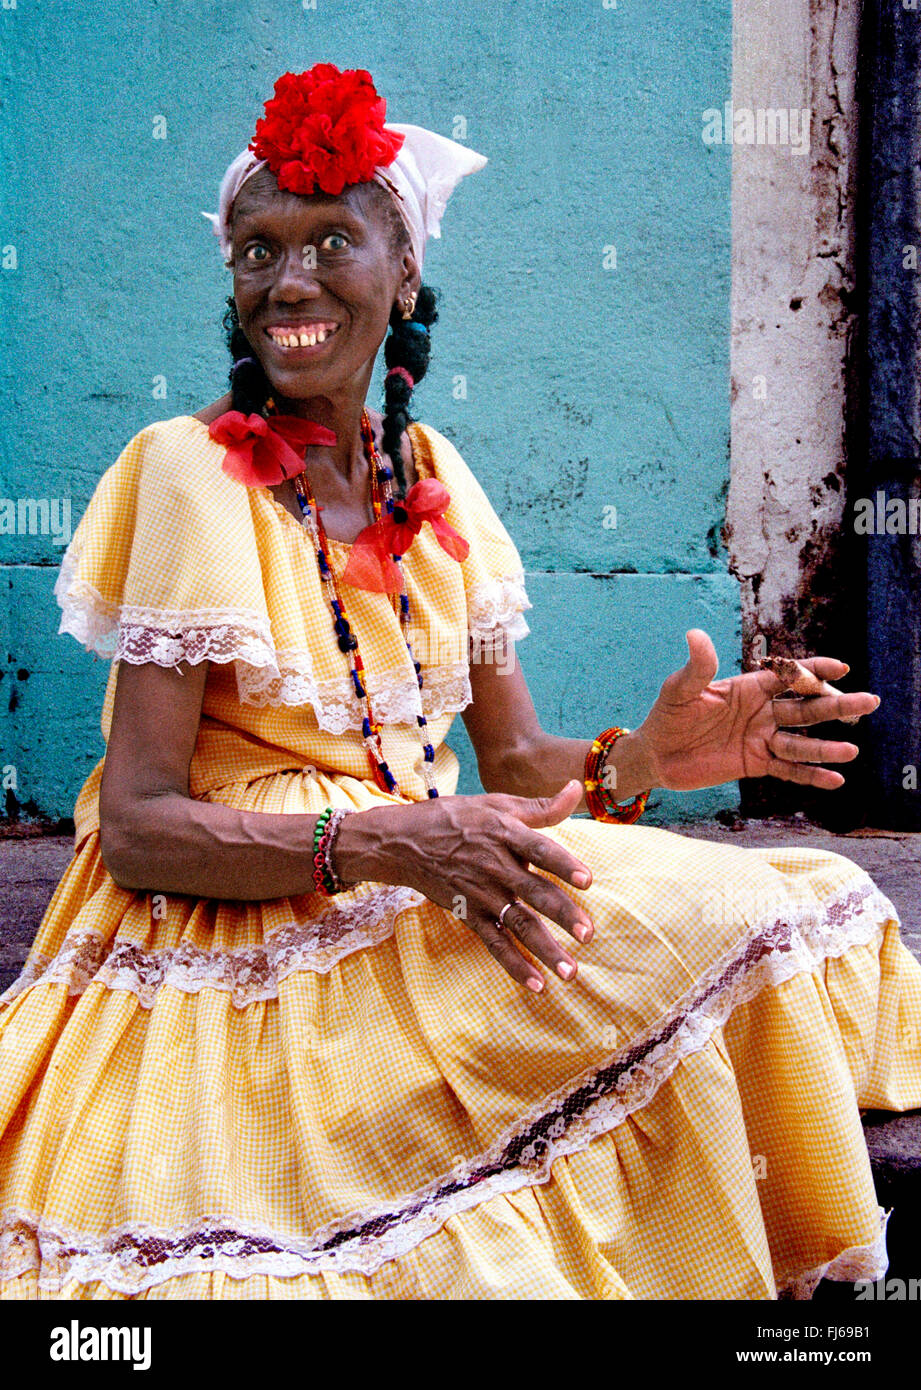 old Cuban woman druggy by smoking marihuana joint, Cuba Stock Photo